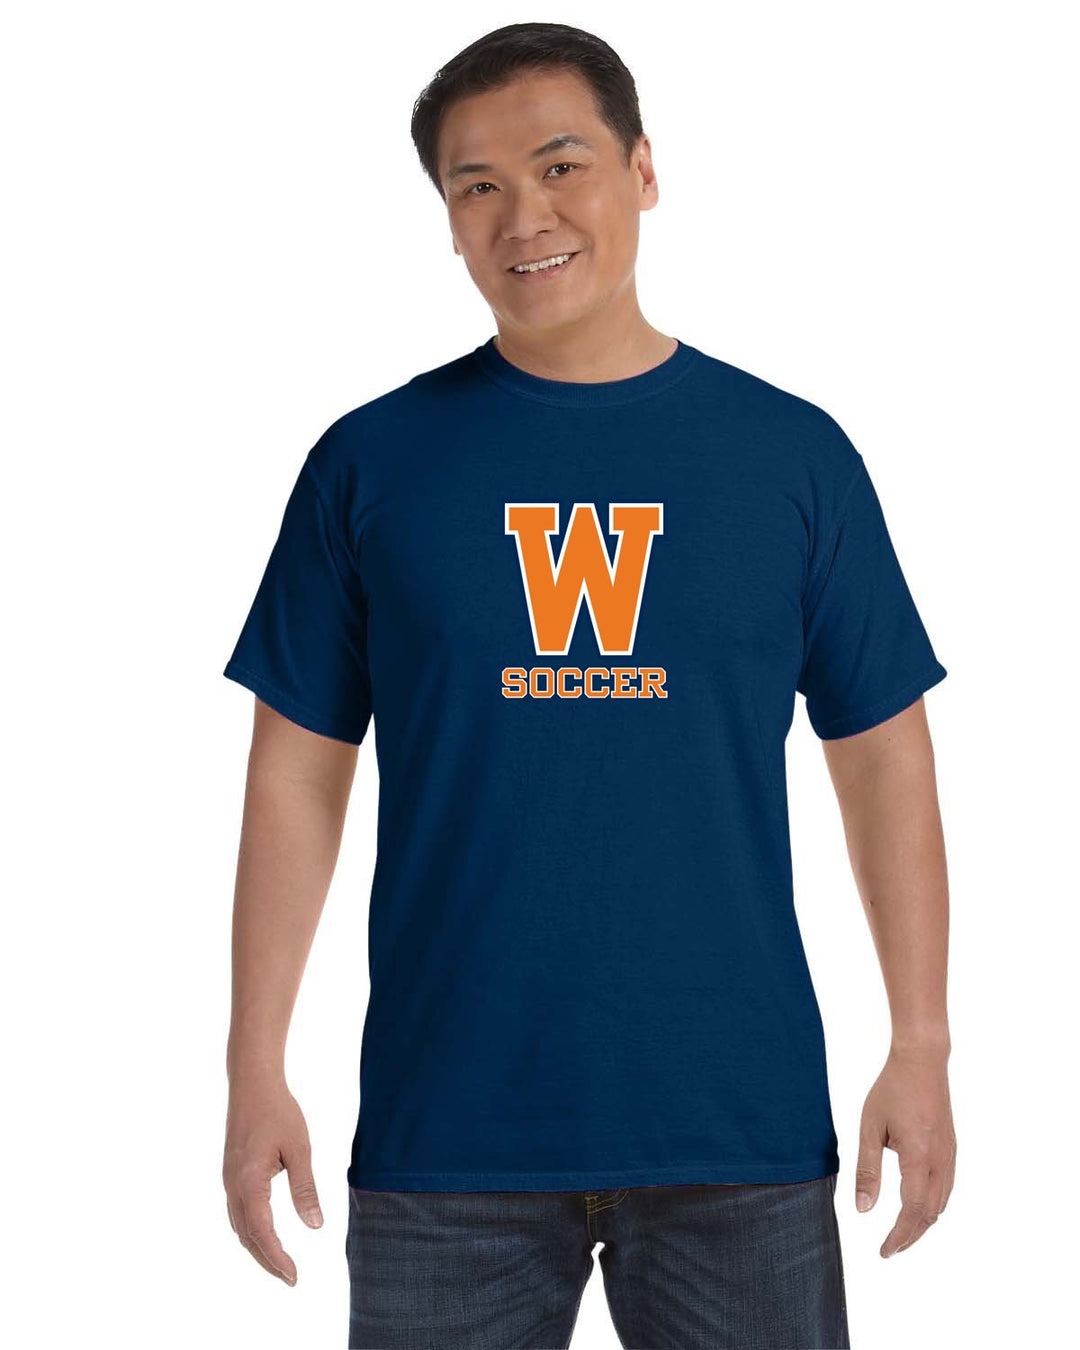 Walpole Boys Soccer Adult Heavyweight T-Shirt (C1717)